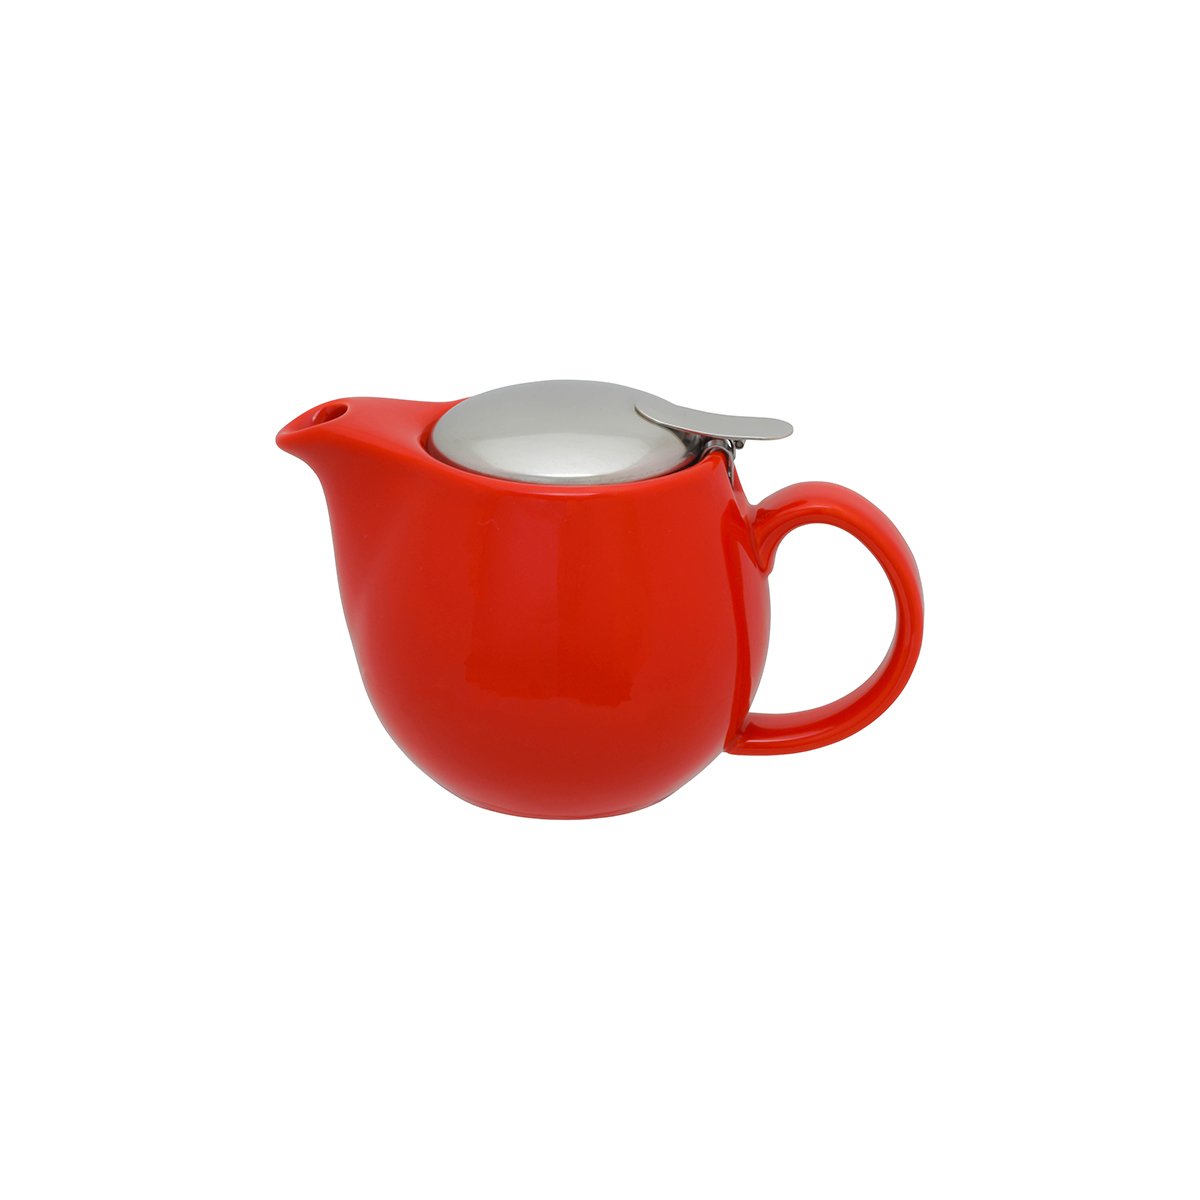 BW0070 Brew Chilli Teapot 350ml Tomkin Australia Hospitality Supplies